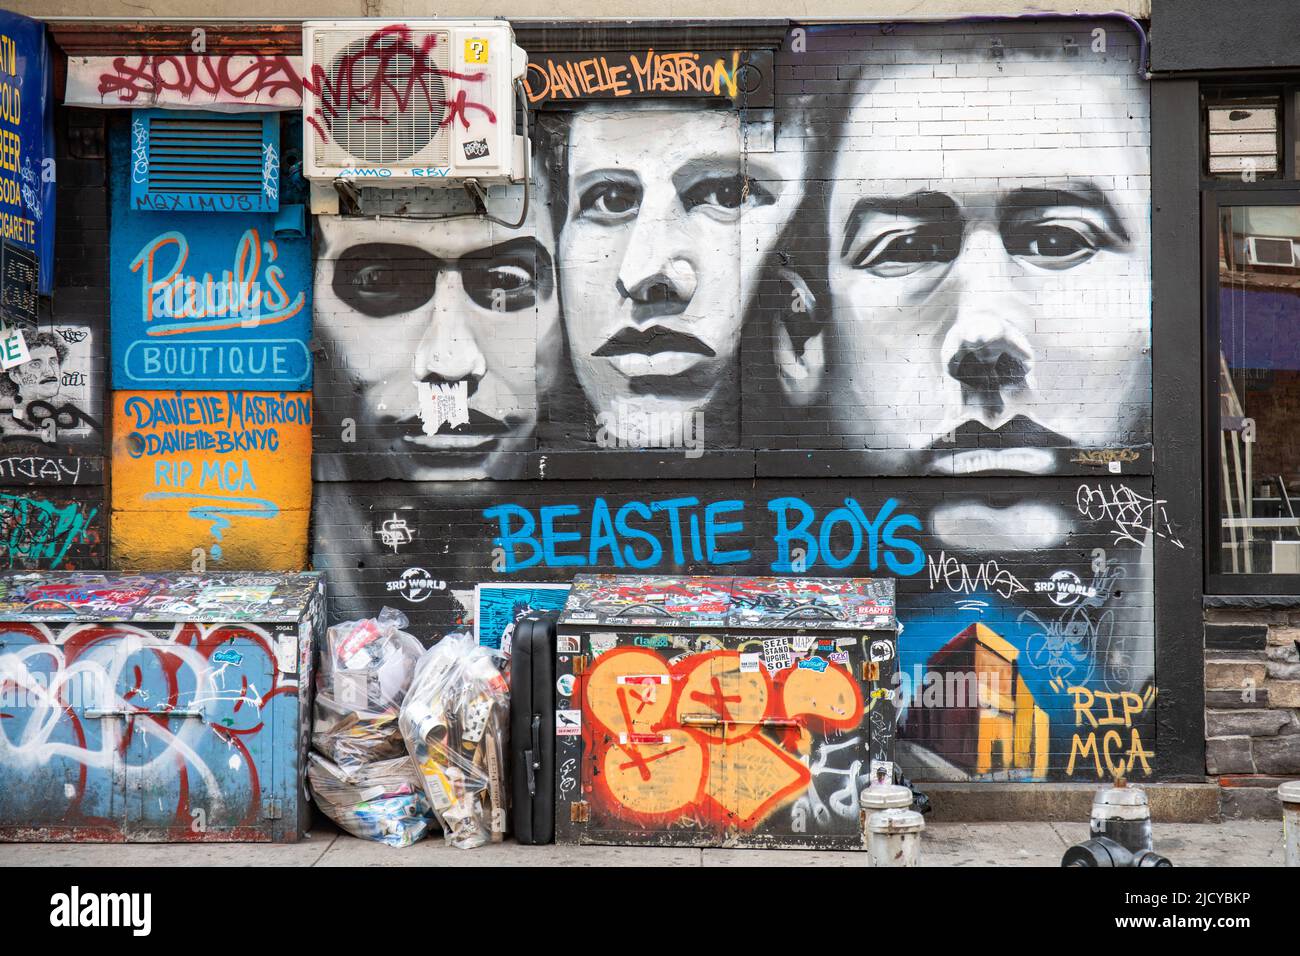 Street art. Beastie Boys mural graffiti by Danielle Mastrion in Lower East Side of Manhattan, New York City, United States of America. Stock Photo